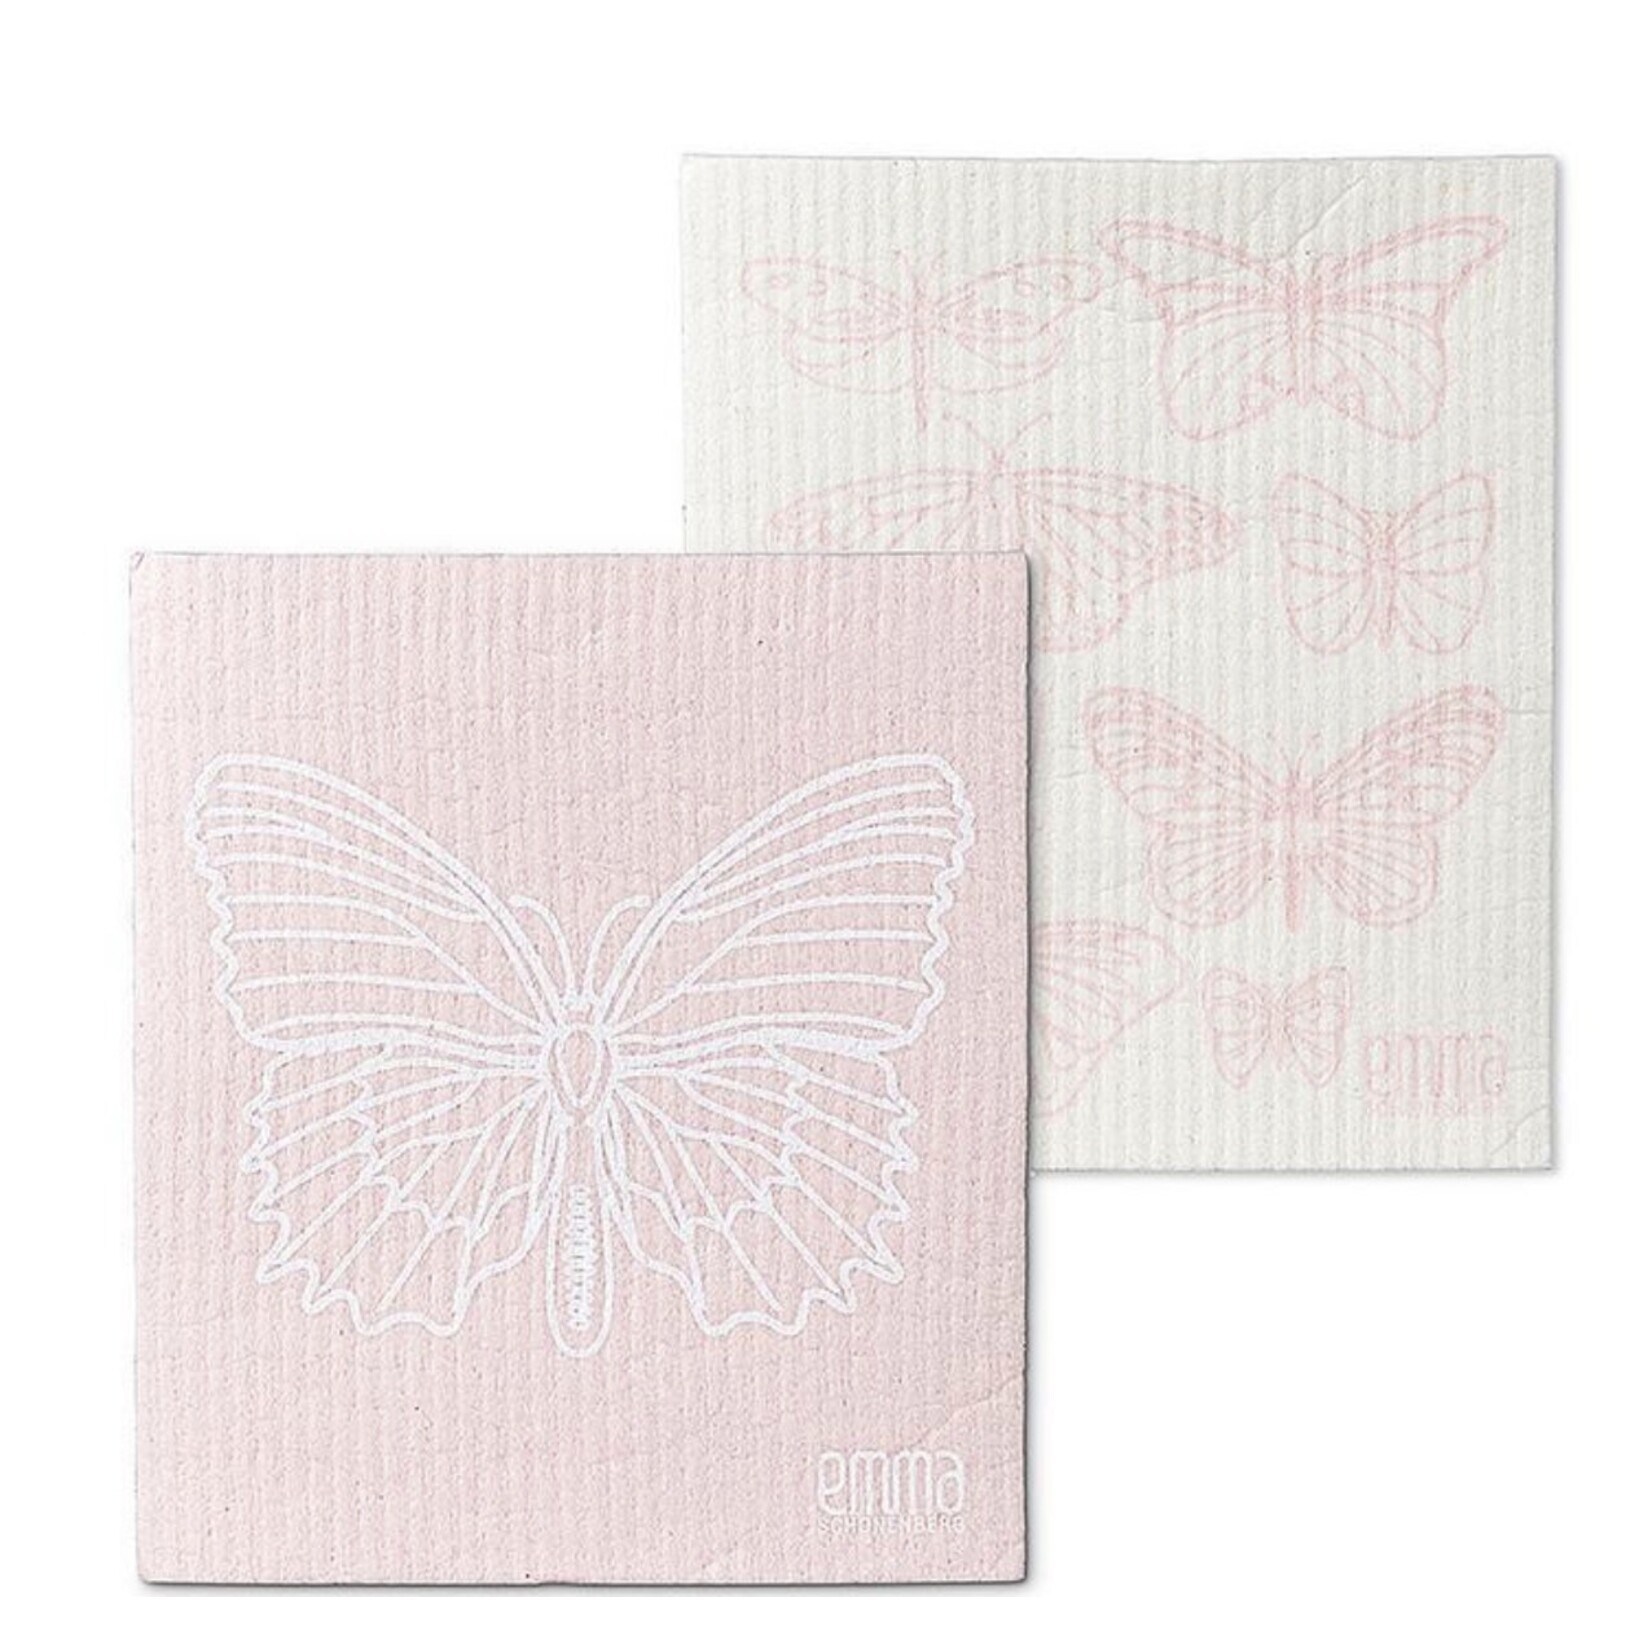 ABBOTT ABBOTT Swedish Dishcloth S/2 - Pink Butterfly